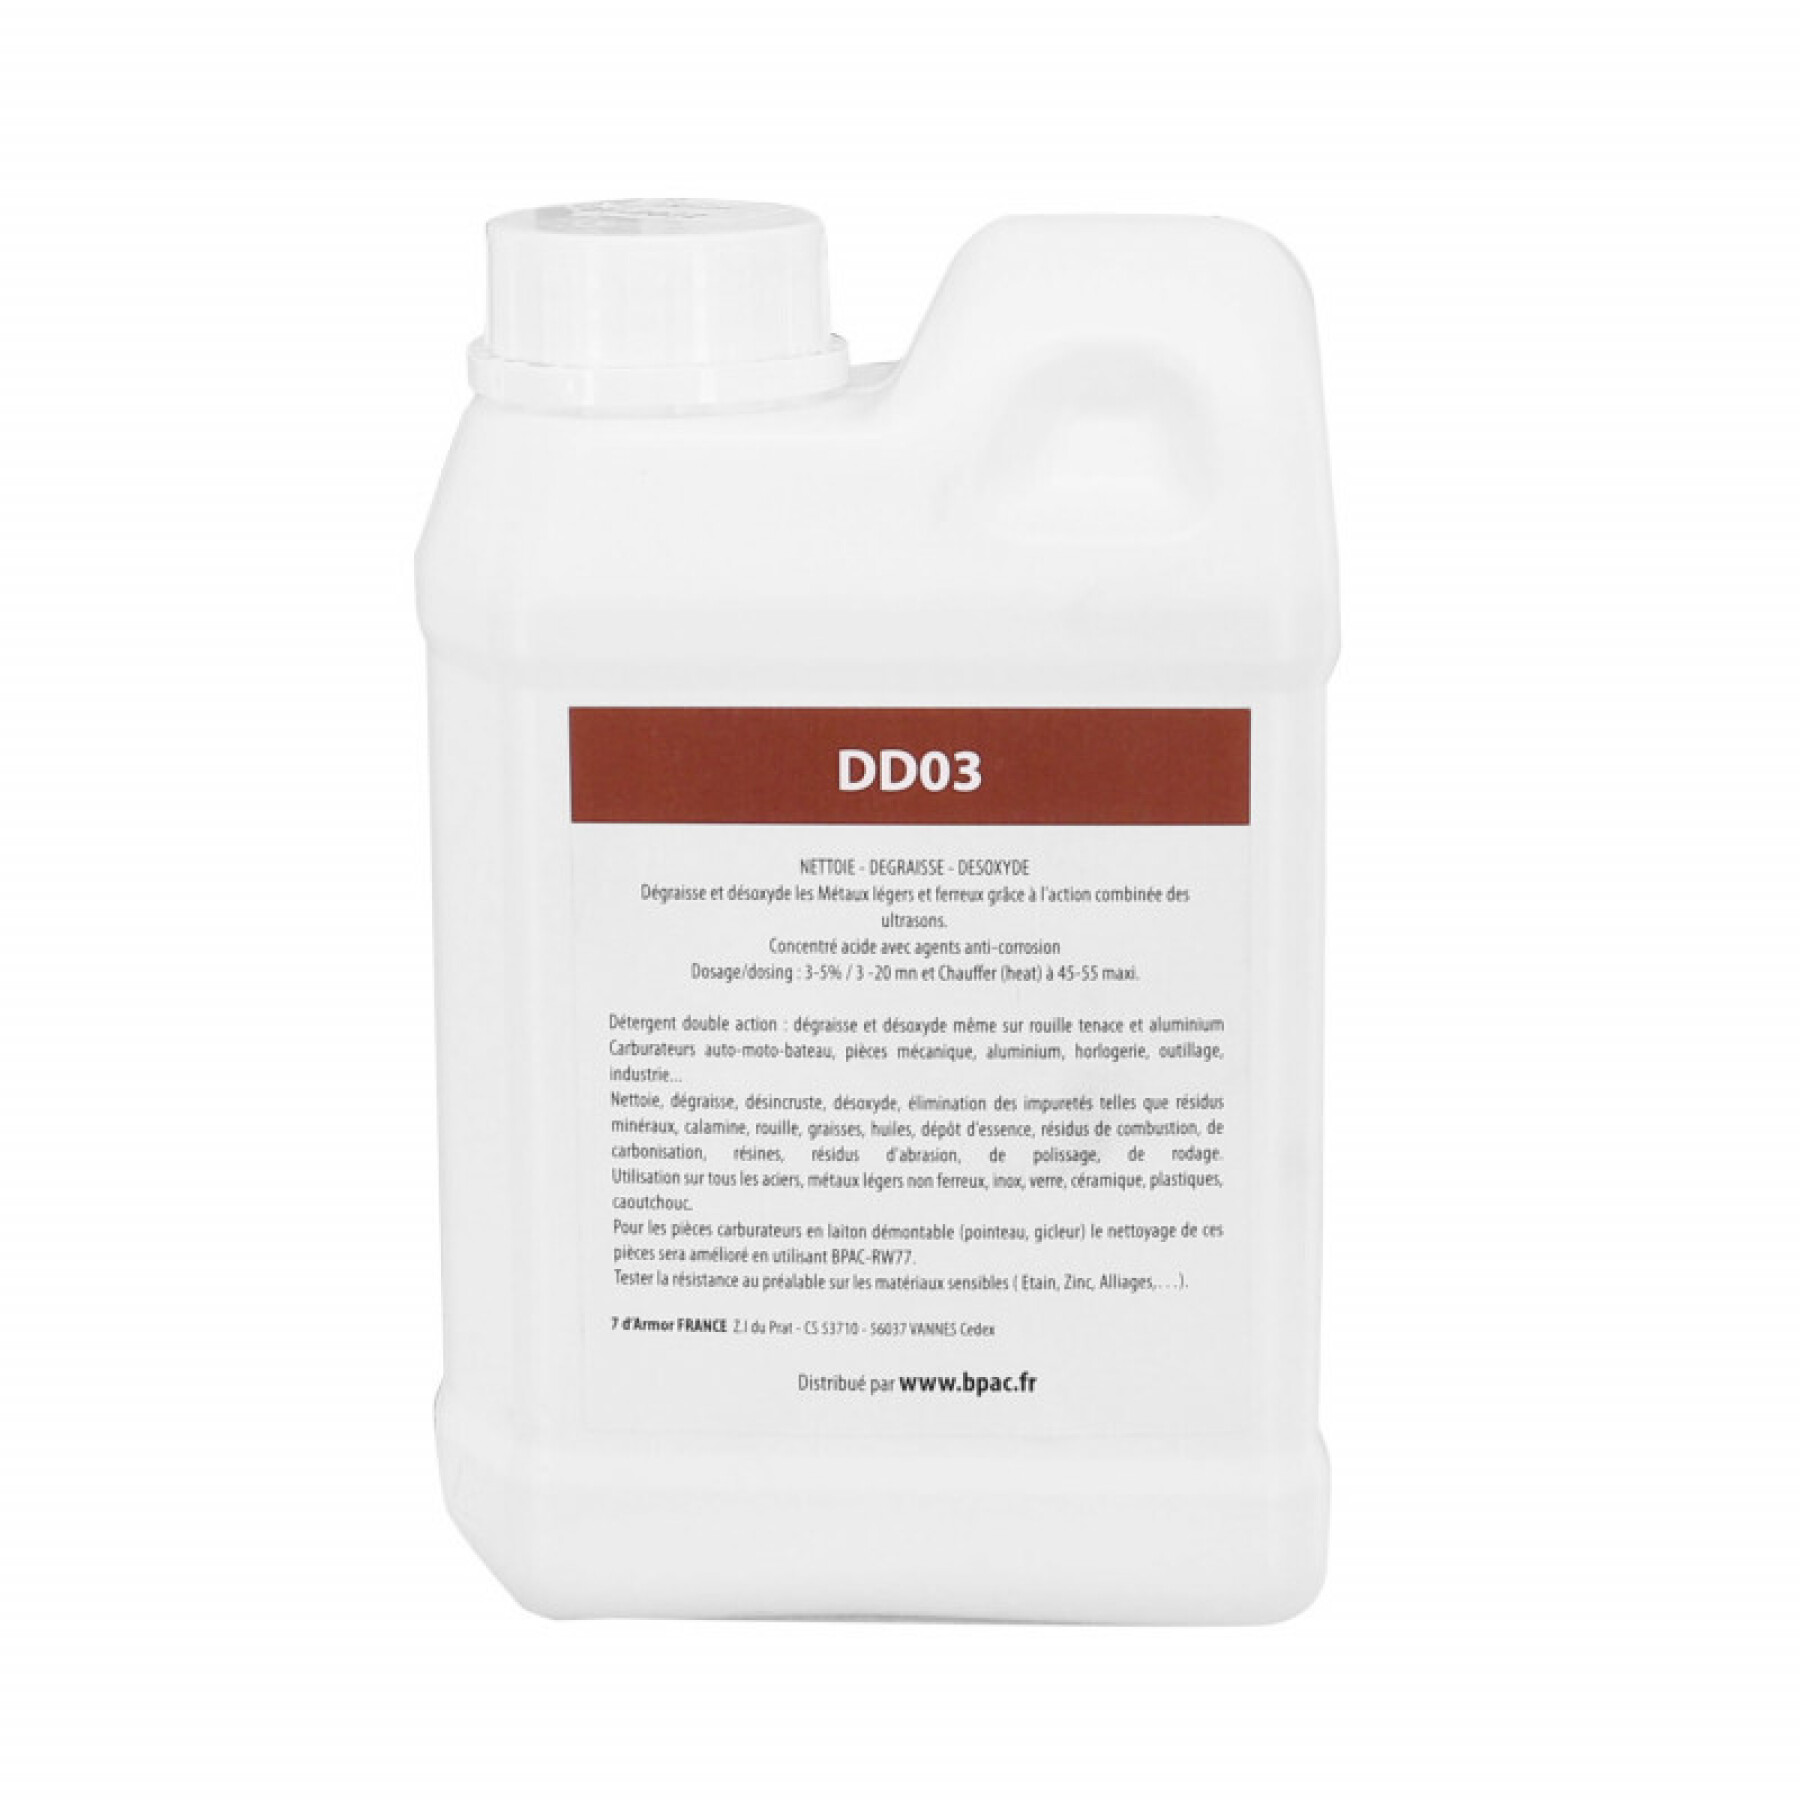 Detergent nettoyeur-bac ultrasonic professionnel P2R DD03